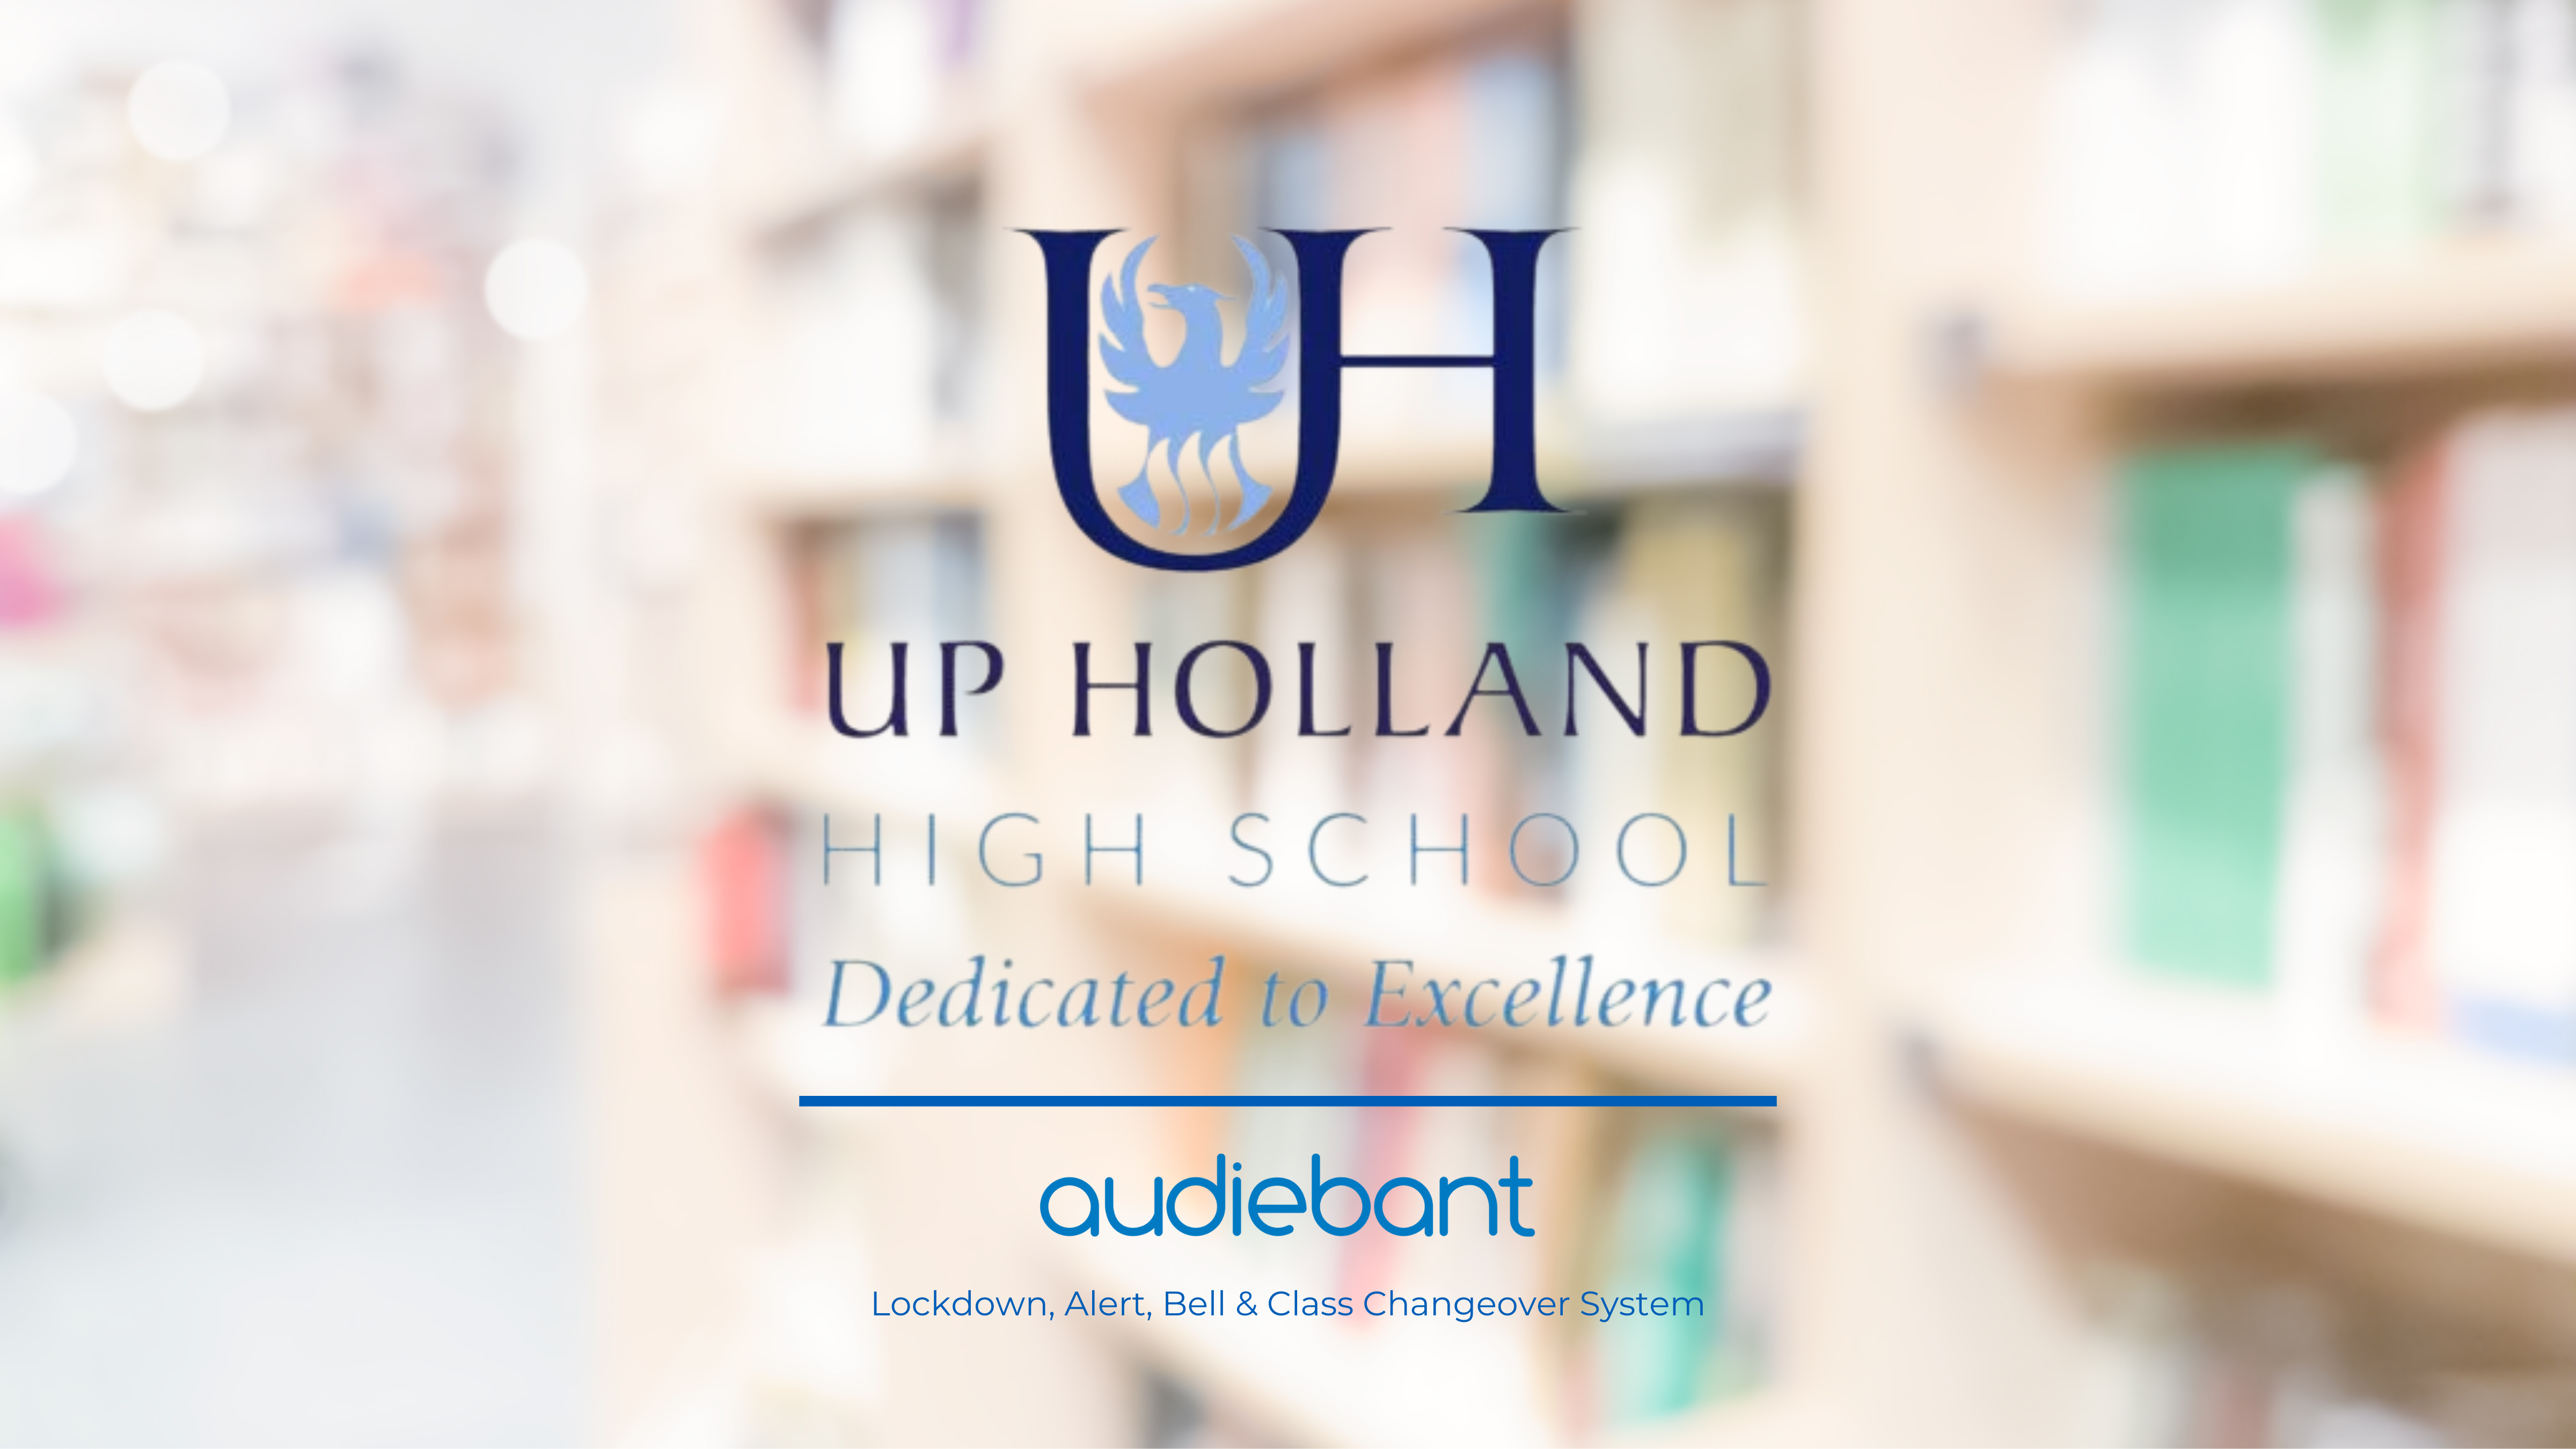 UpHolland High School and Audiebants partnership